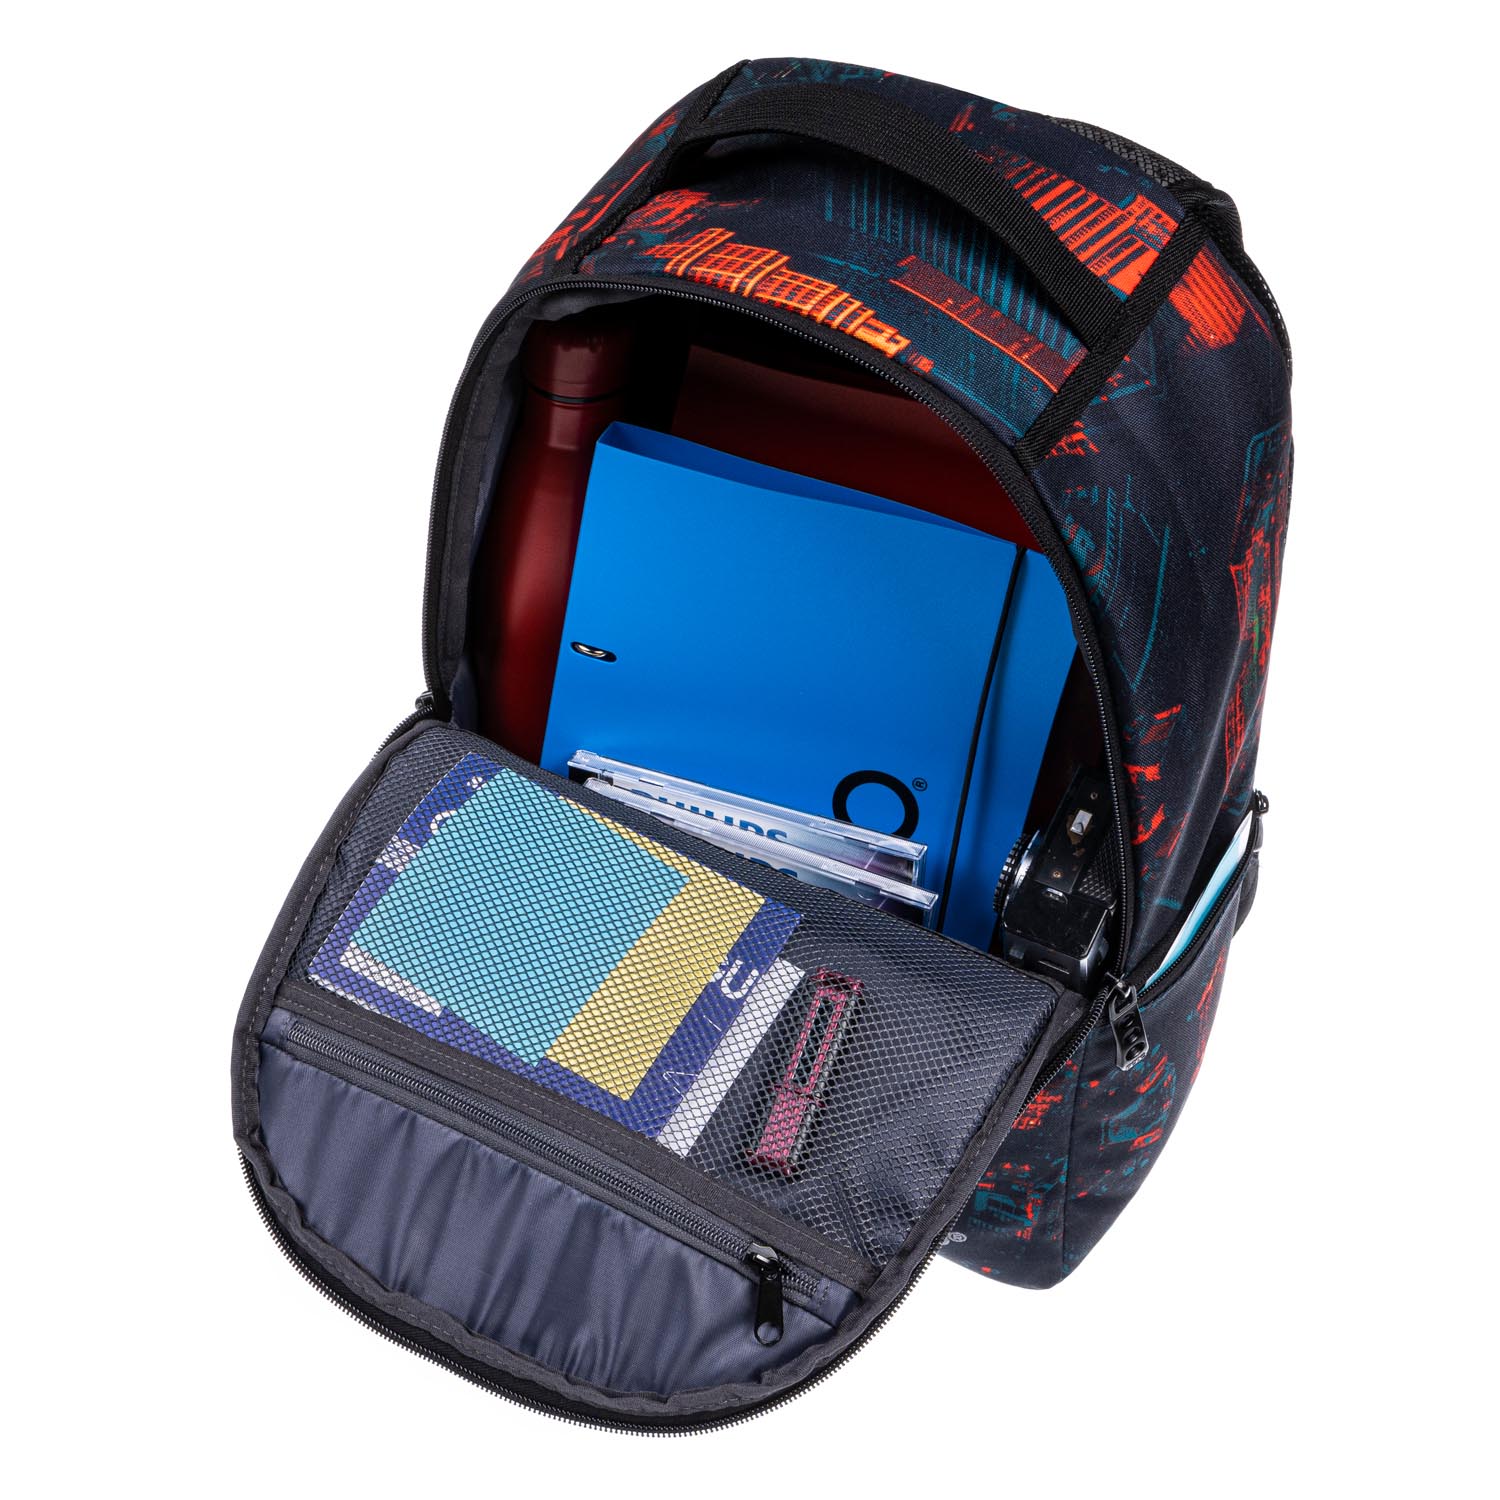 POLO - Polo Backpack ROVER Print Σχολική Τσάντα Πλάτης Χρώμα Μαύρο 25 lt Υ47 x Μ30 x Π16 cm 9-01-028-8157 laptop case & secret case